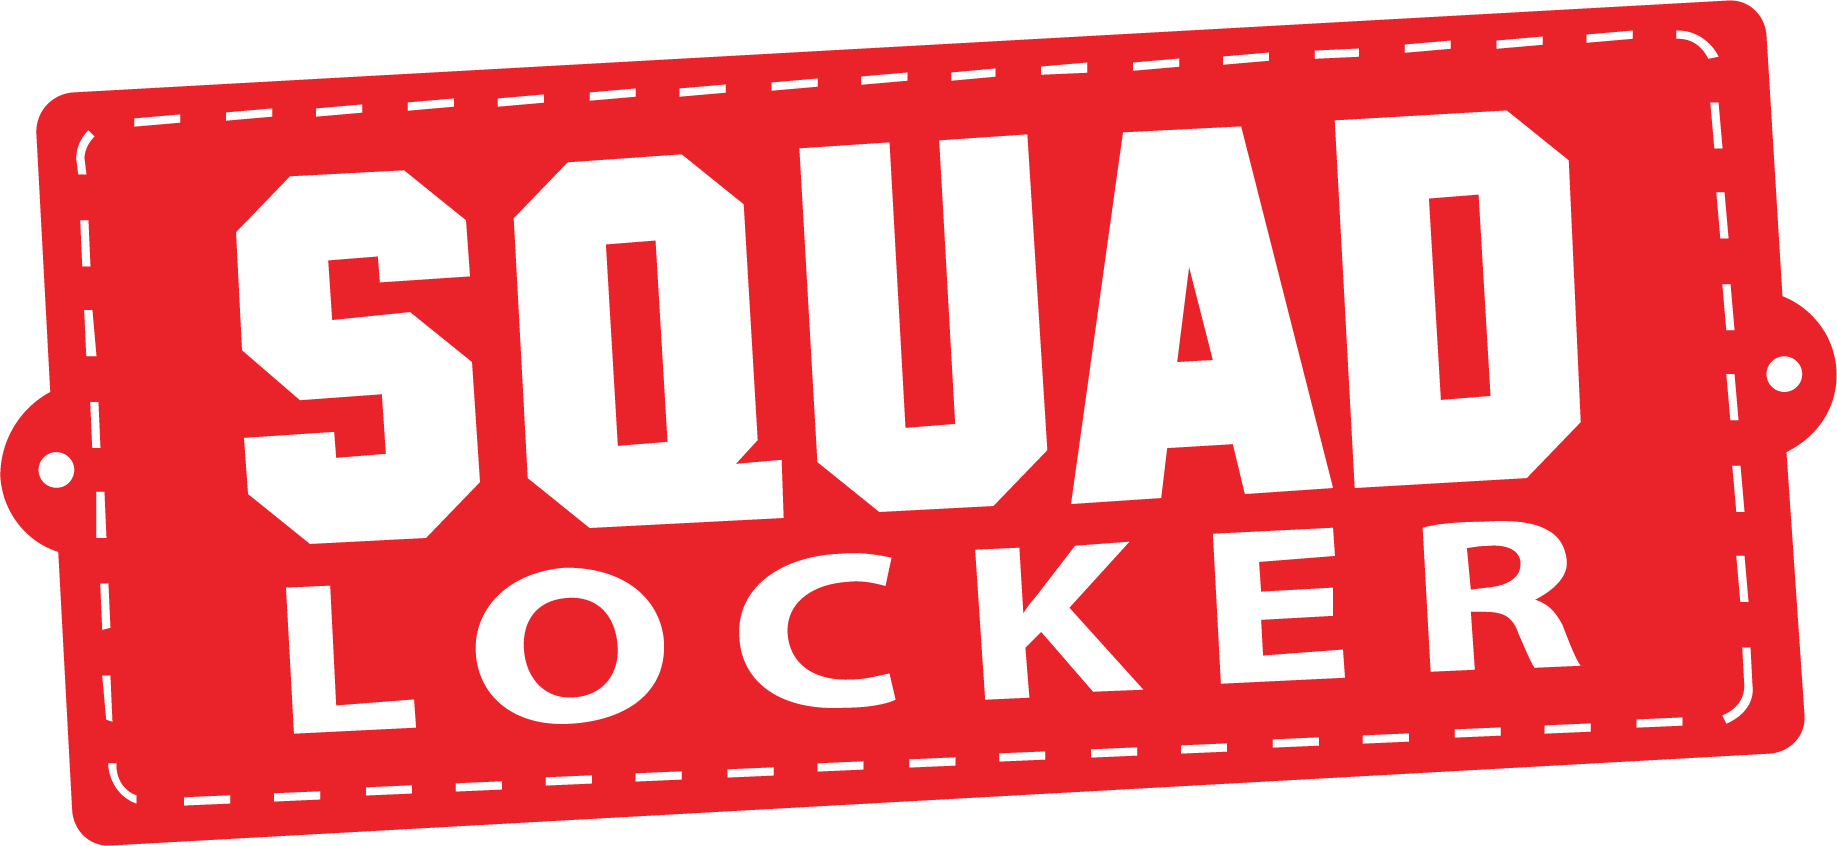 SquadLocker logo